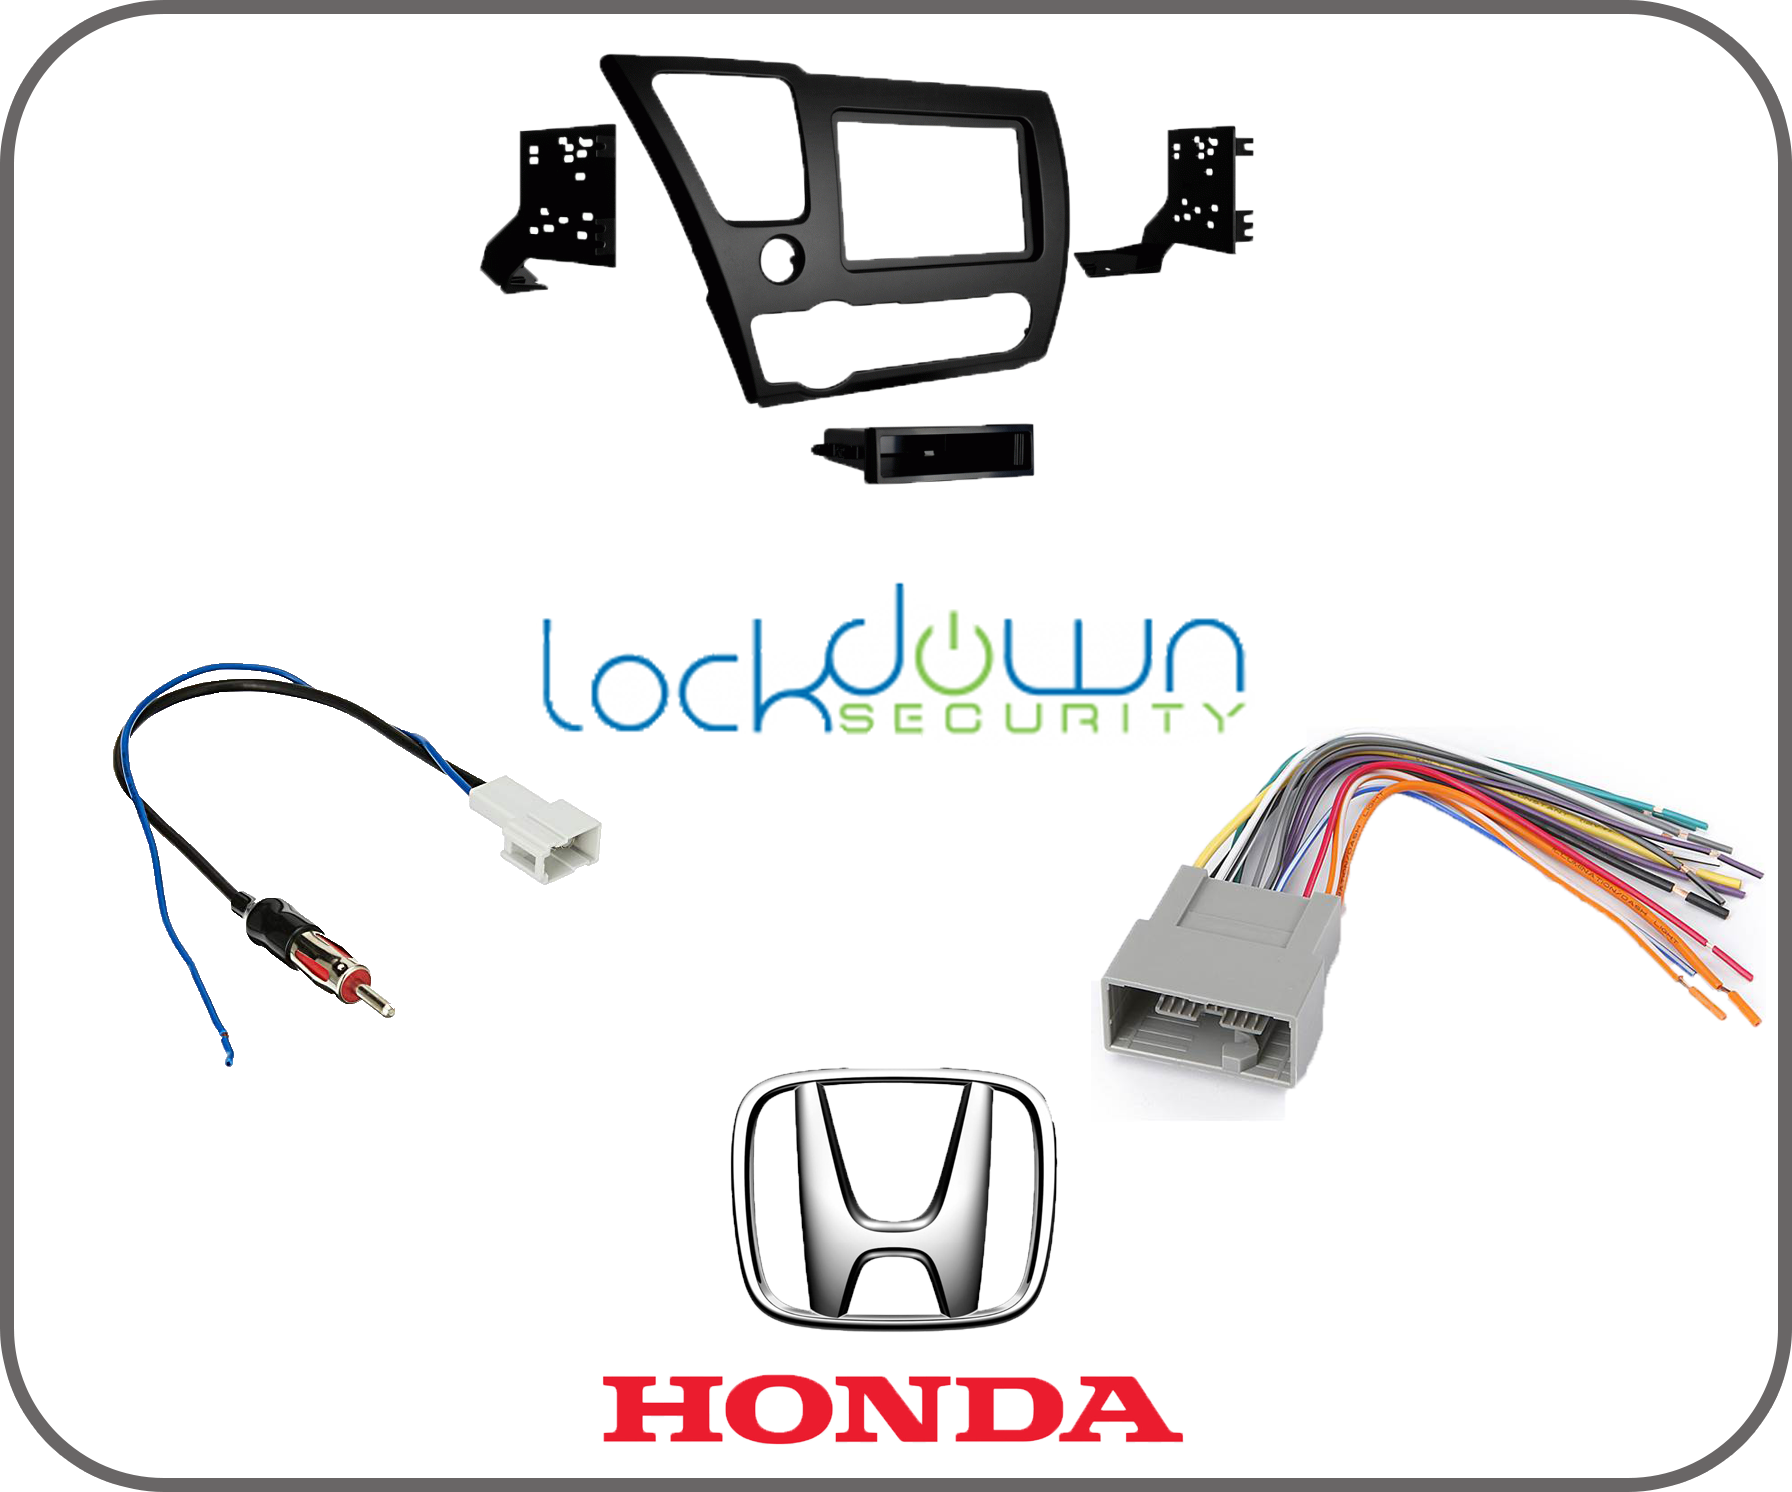 NO SWC ⭕ Honda Civic 2013-2015 Radio Replacement Parts Bundle ⭕ Includes Metra 99-7882B Mount Kit, Metra 70-1729 Wire Harness, Metra 40-HD11 Antenna Adapter